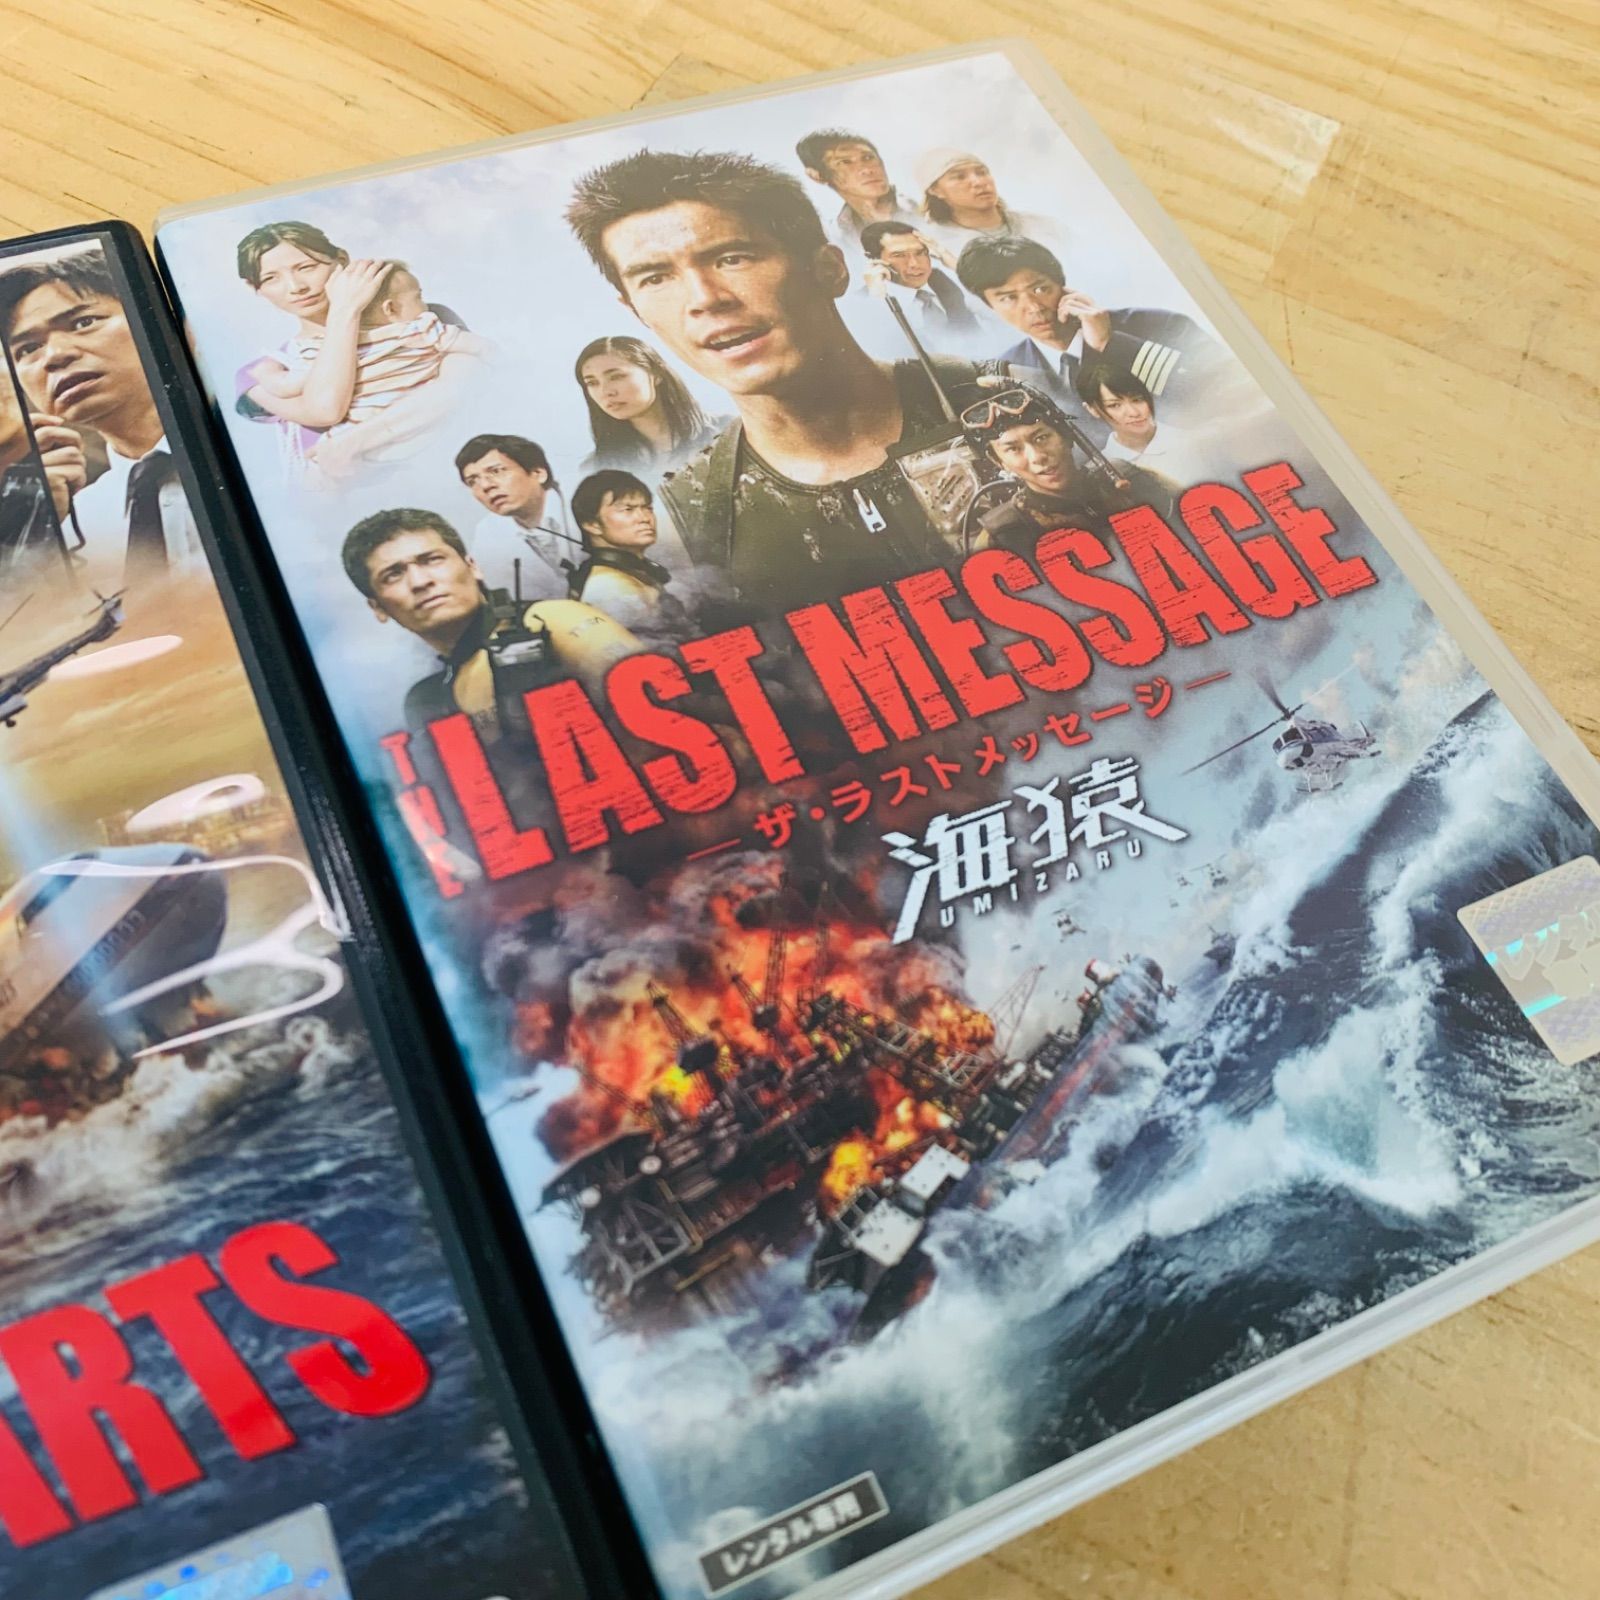 ☆I31700-40 THE LAST MESSAGE BRAVE HEARTS 海猿 DVD レンタルアップ 